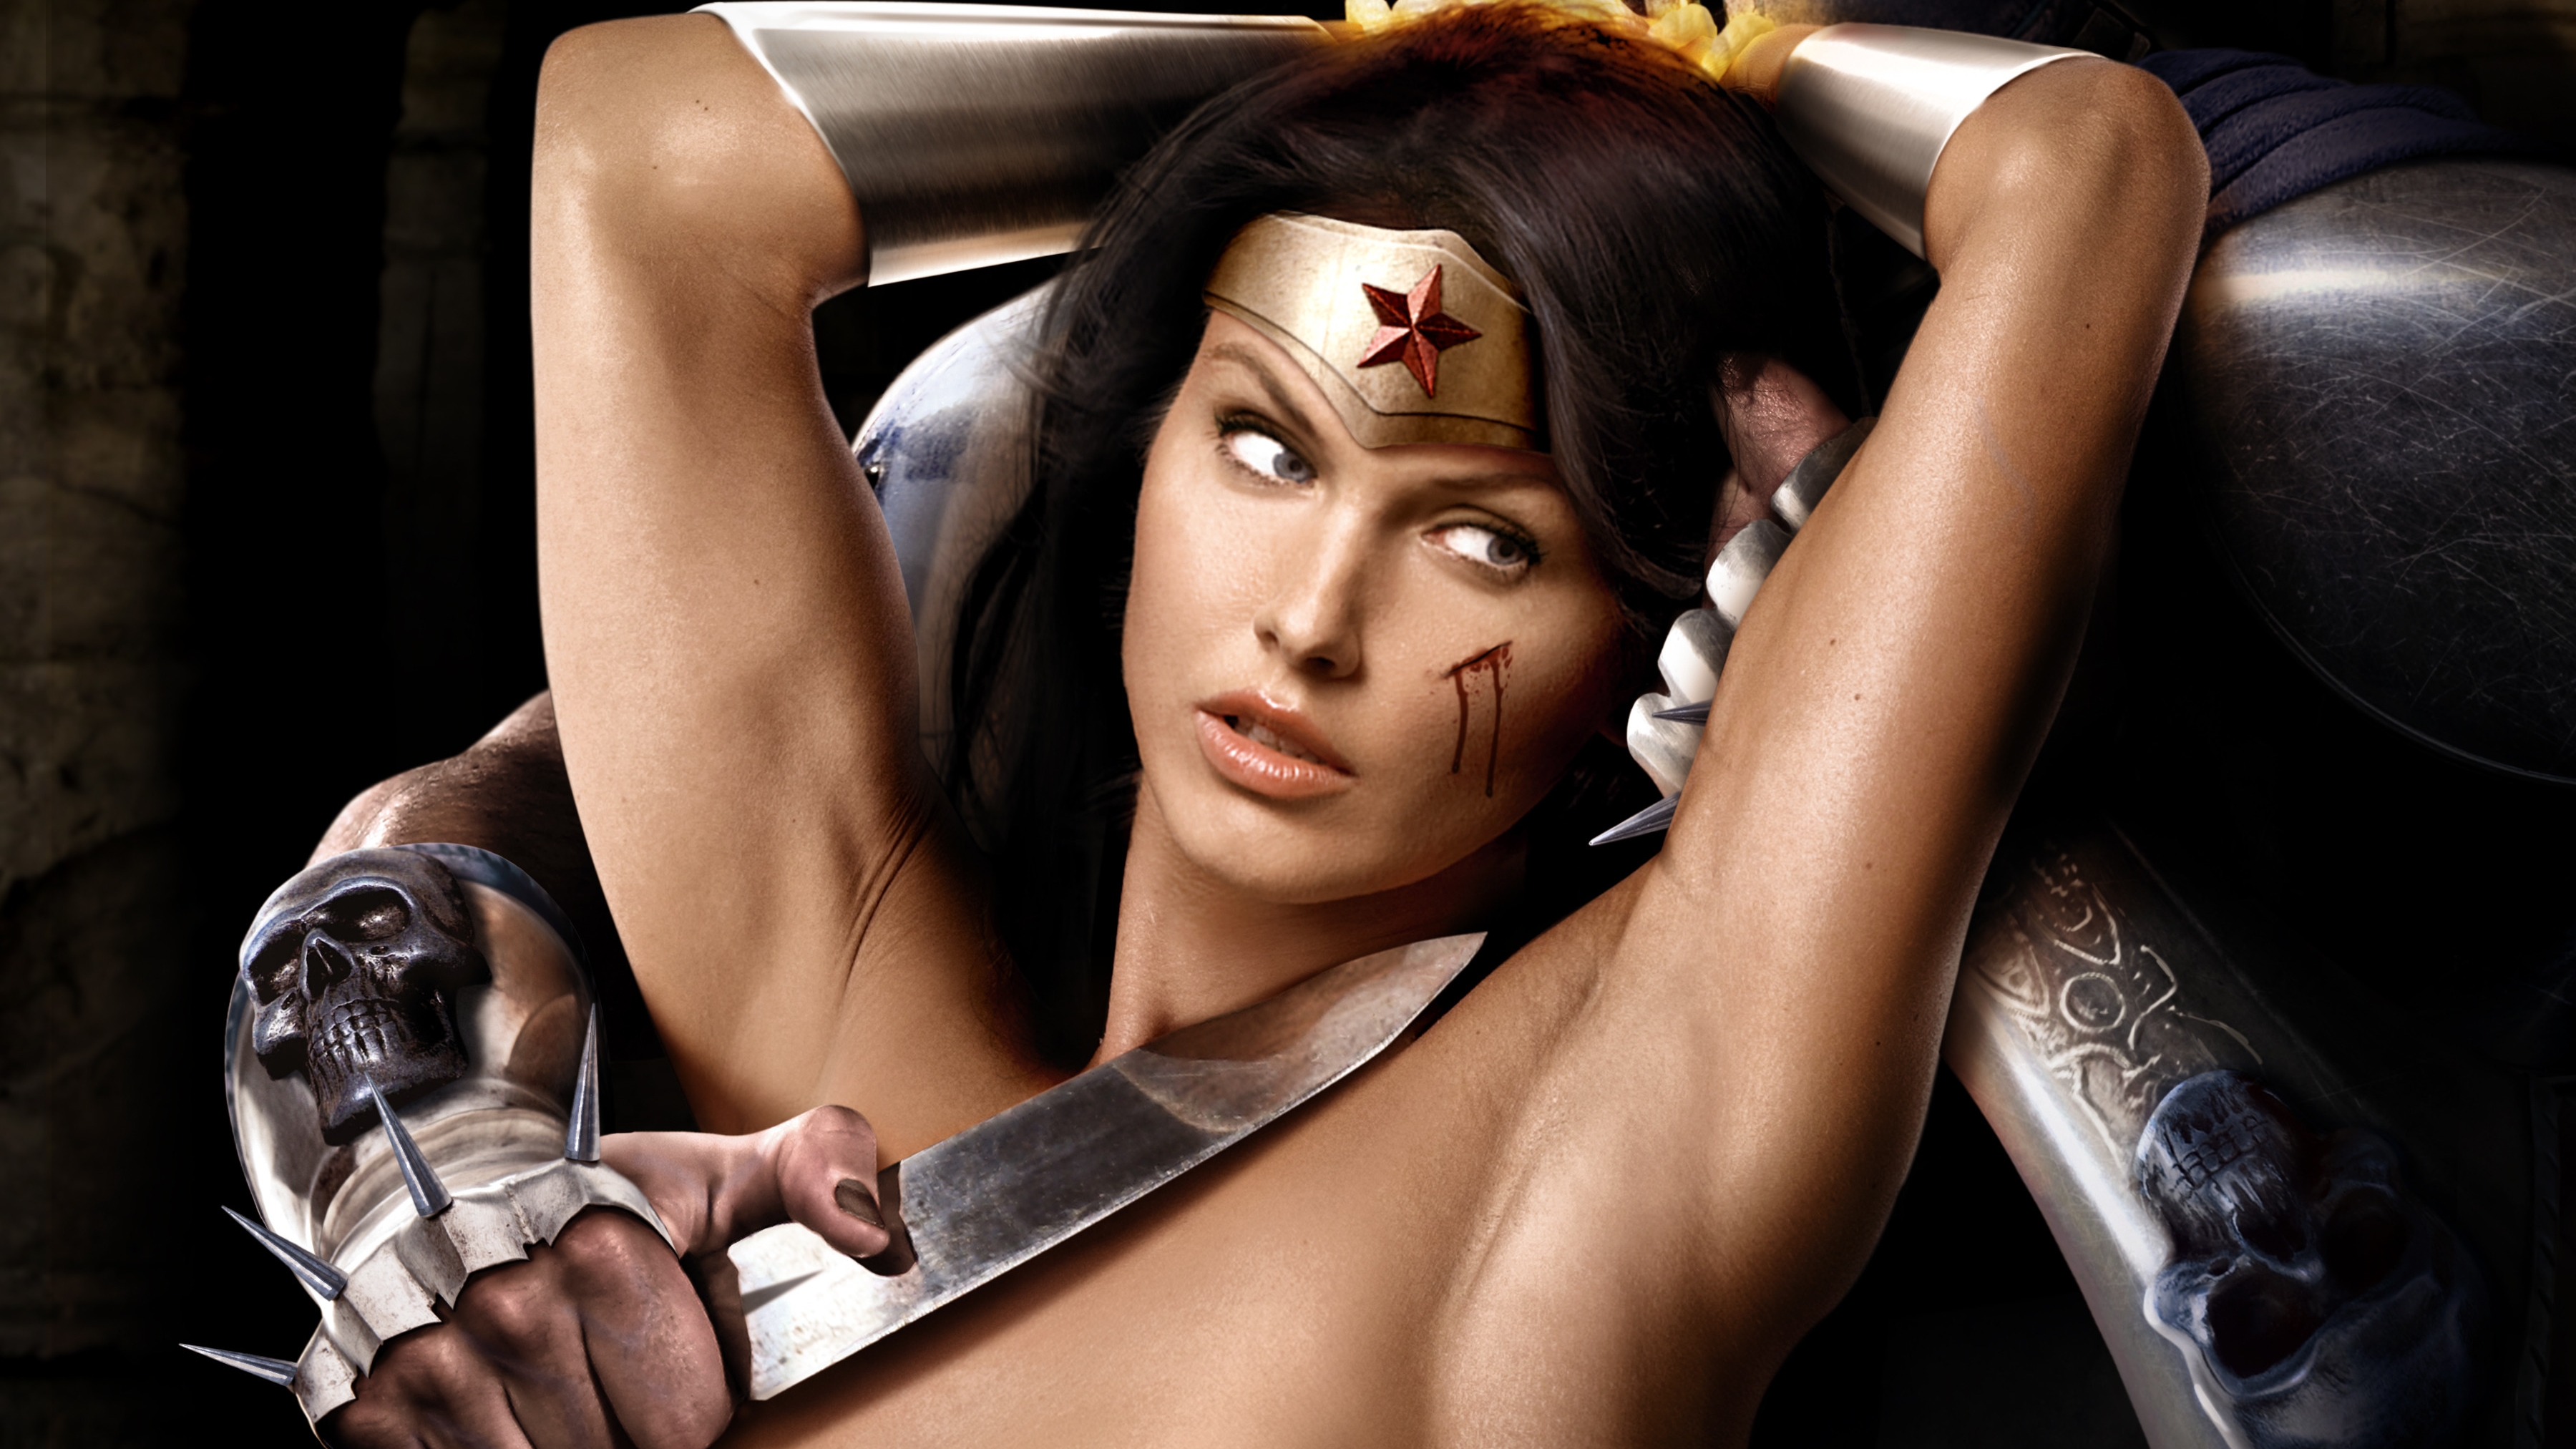 Tori Black Wonder Woman Hot Nude 3